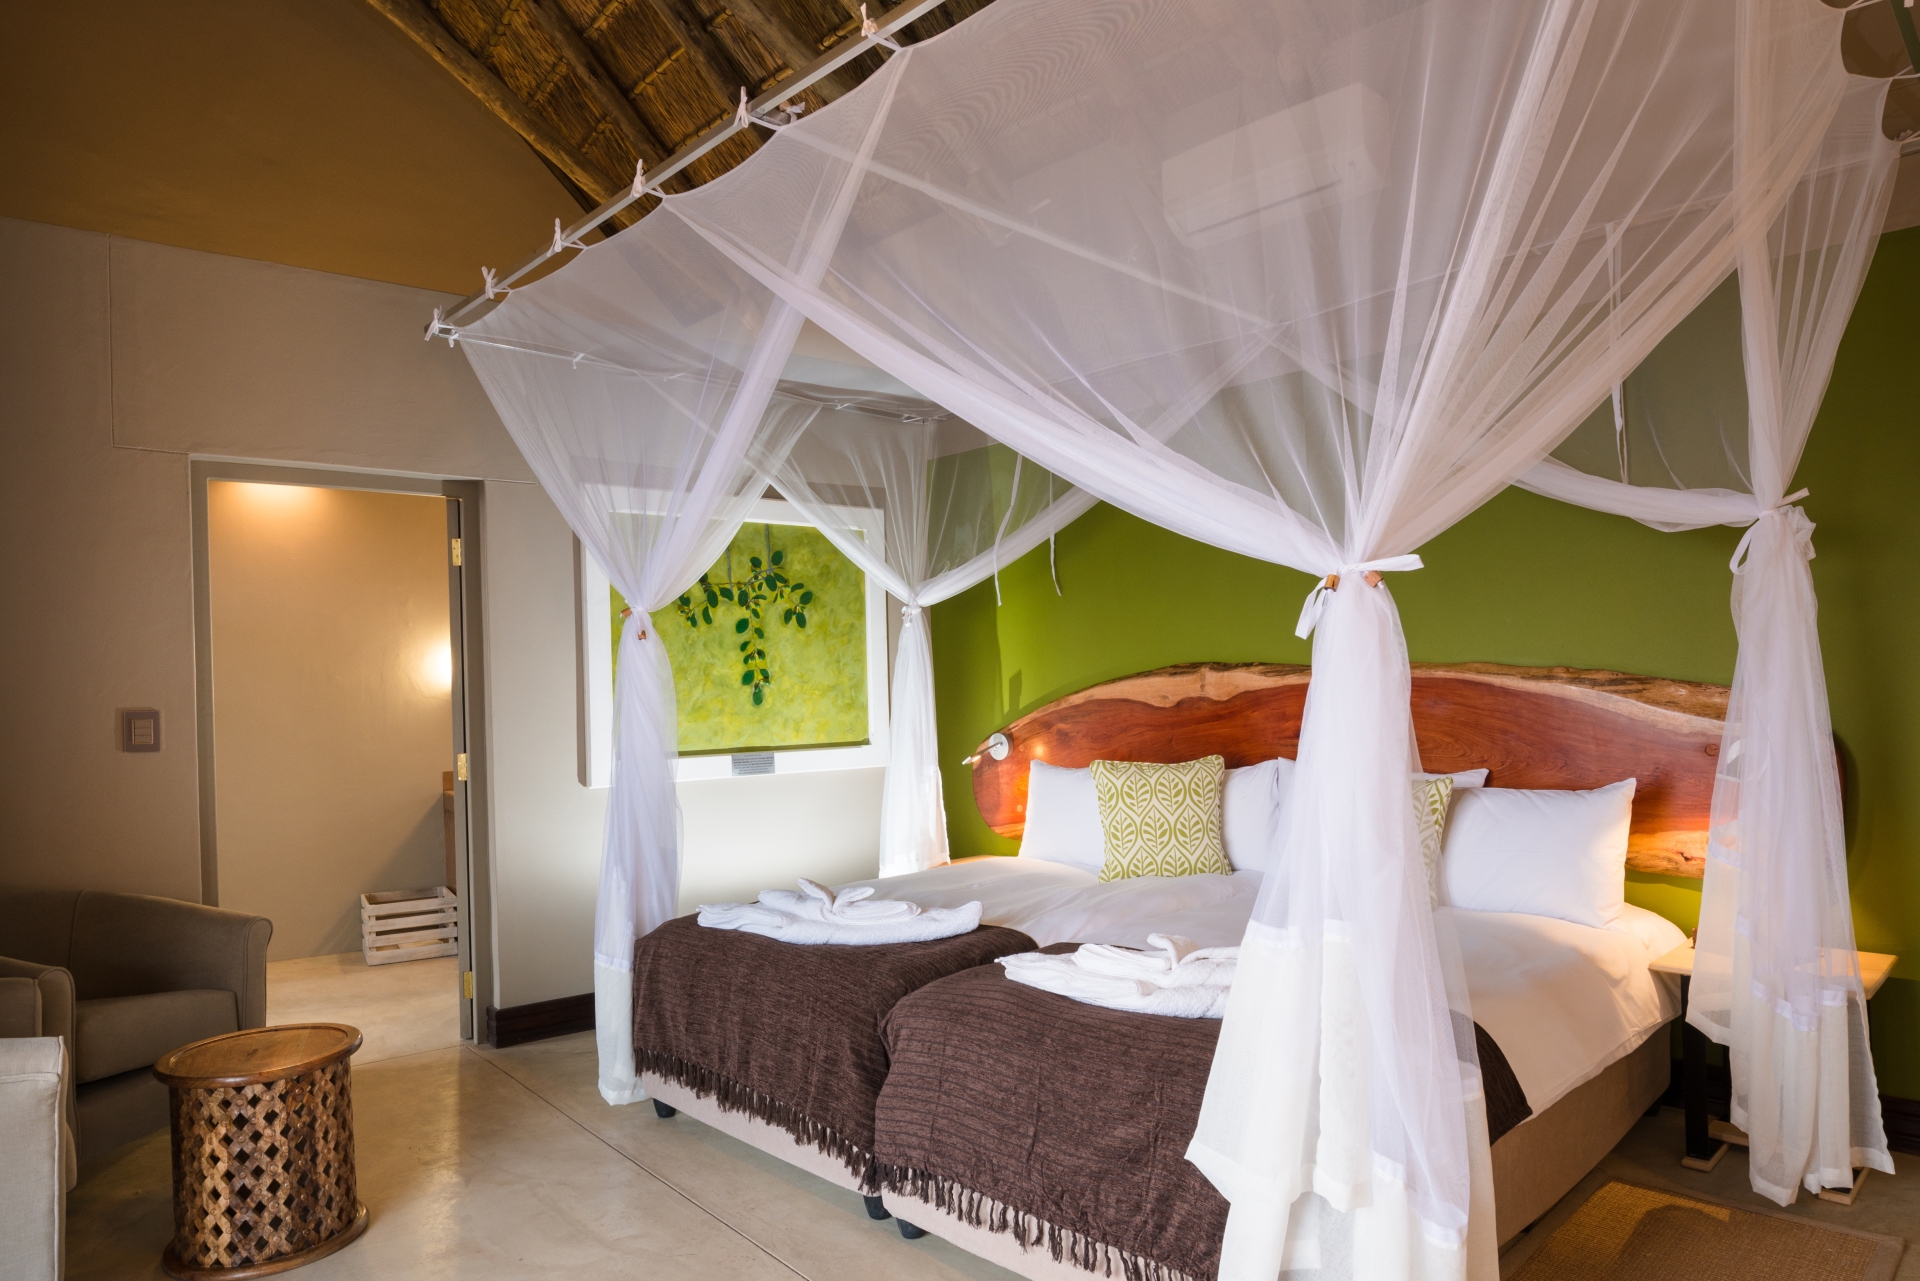 Bedroom Interior - Safarihoek Lodge